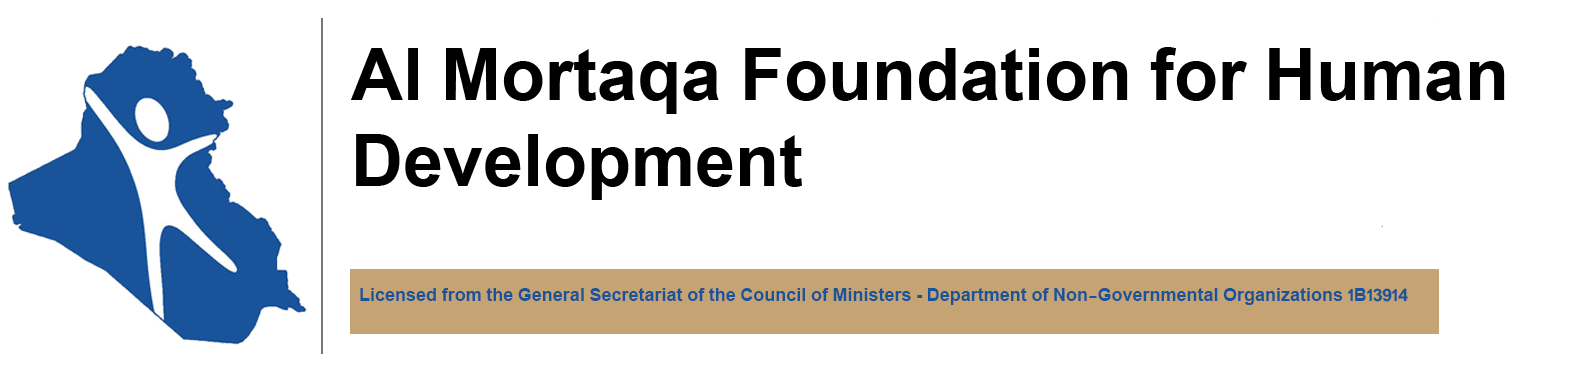 Al Mortaqa Foundation for Human Development 